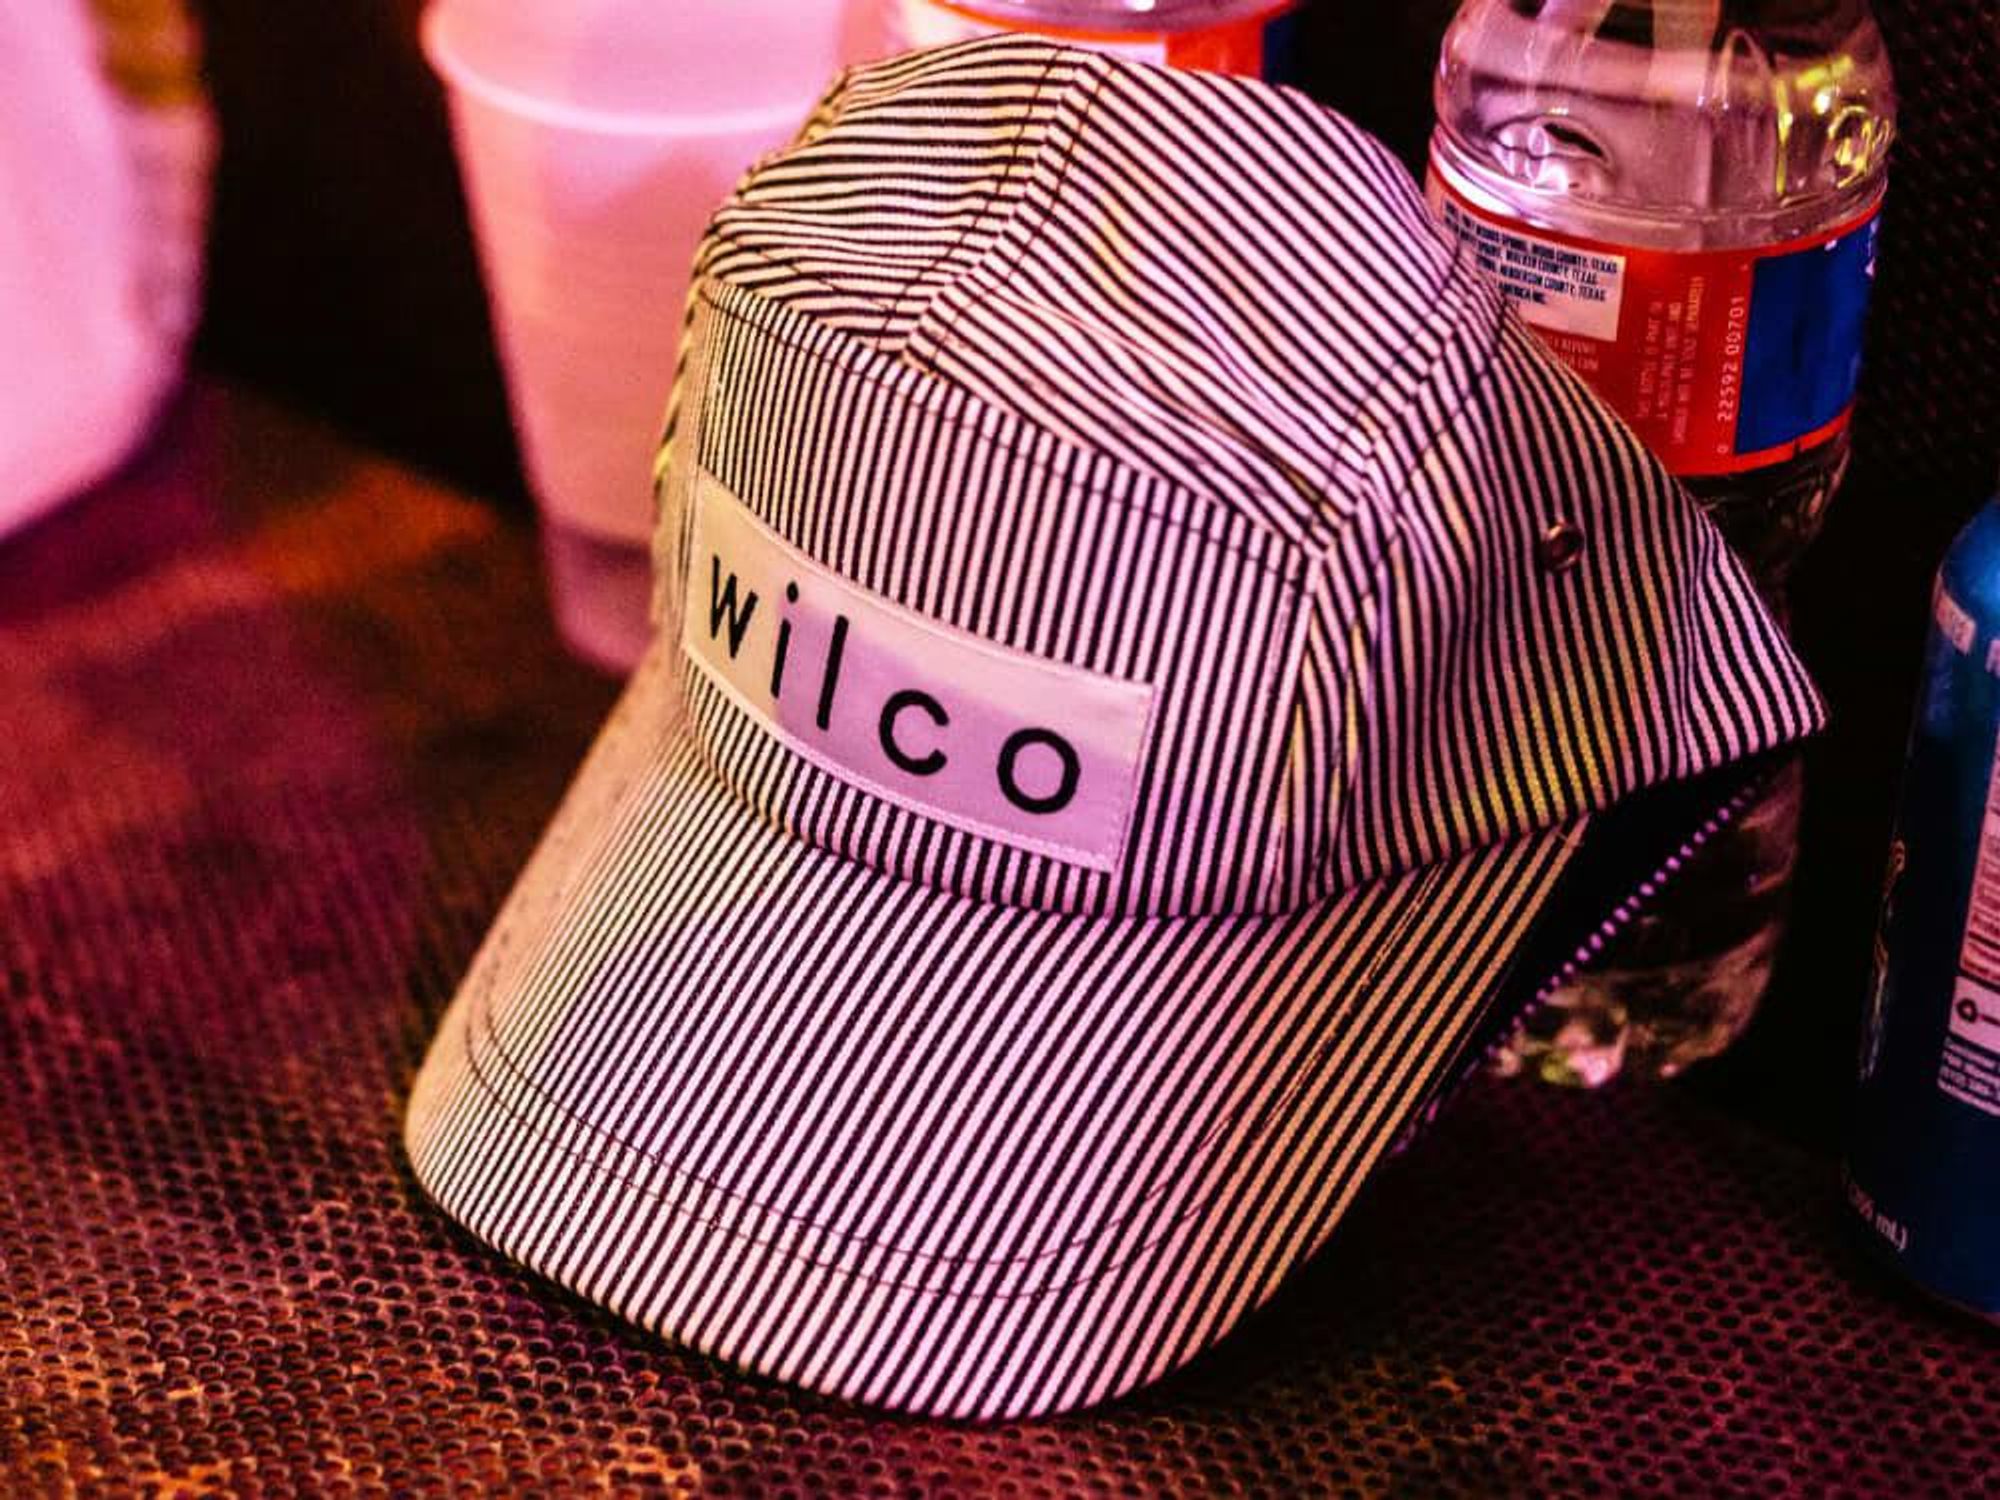 Wilco at Stubb's in Austin September 2015